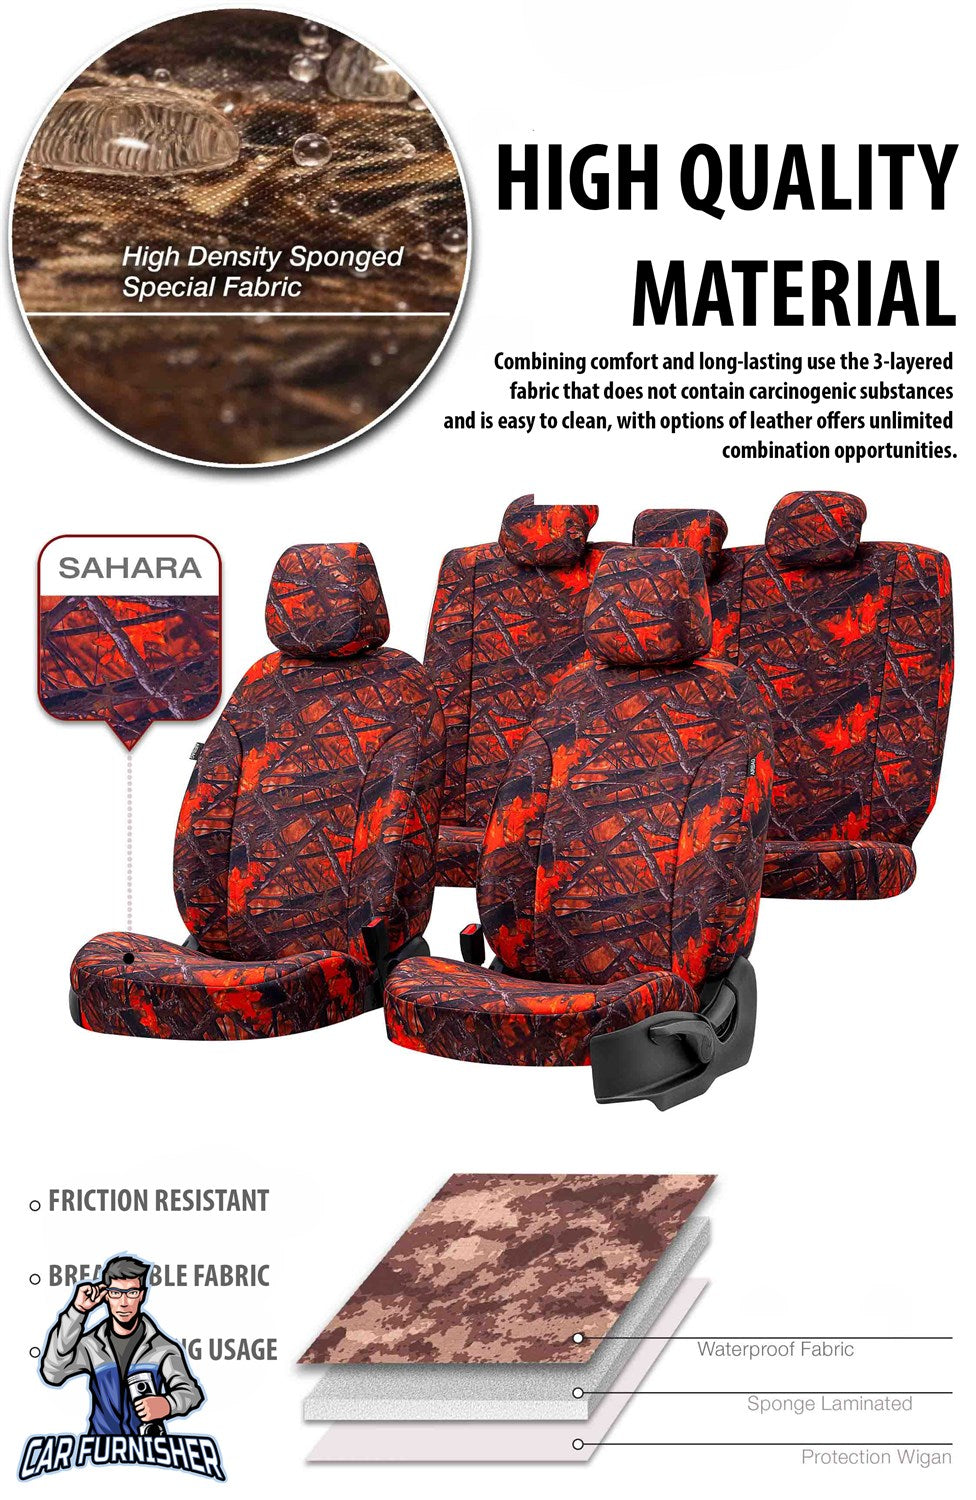 Dfm Succe Seat Covers Camouflage Waterproof Design Alps Camo Waterproof Fabric